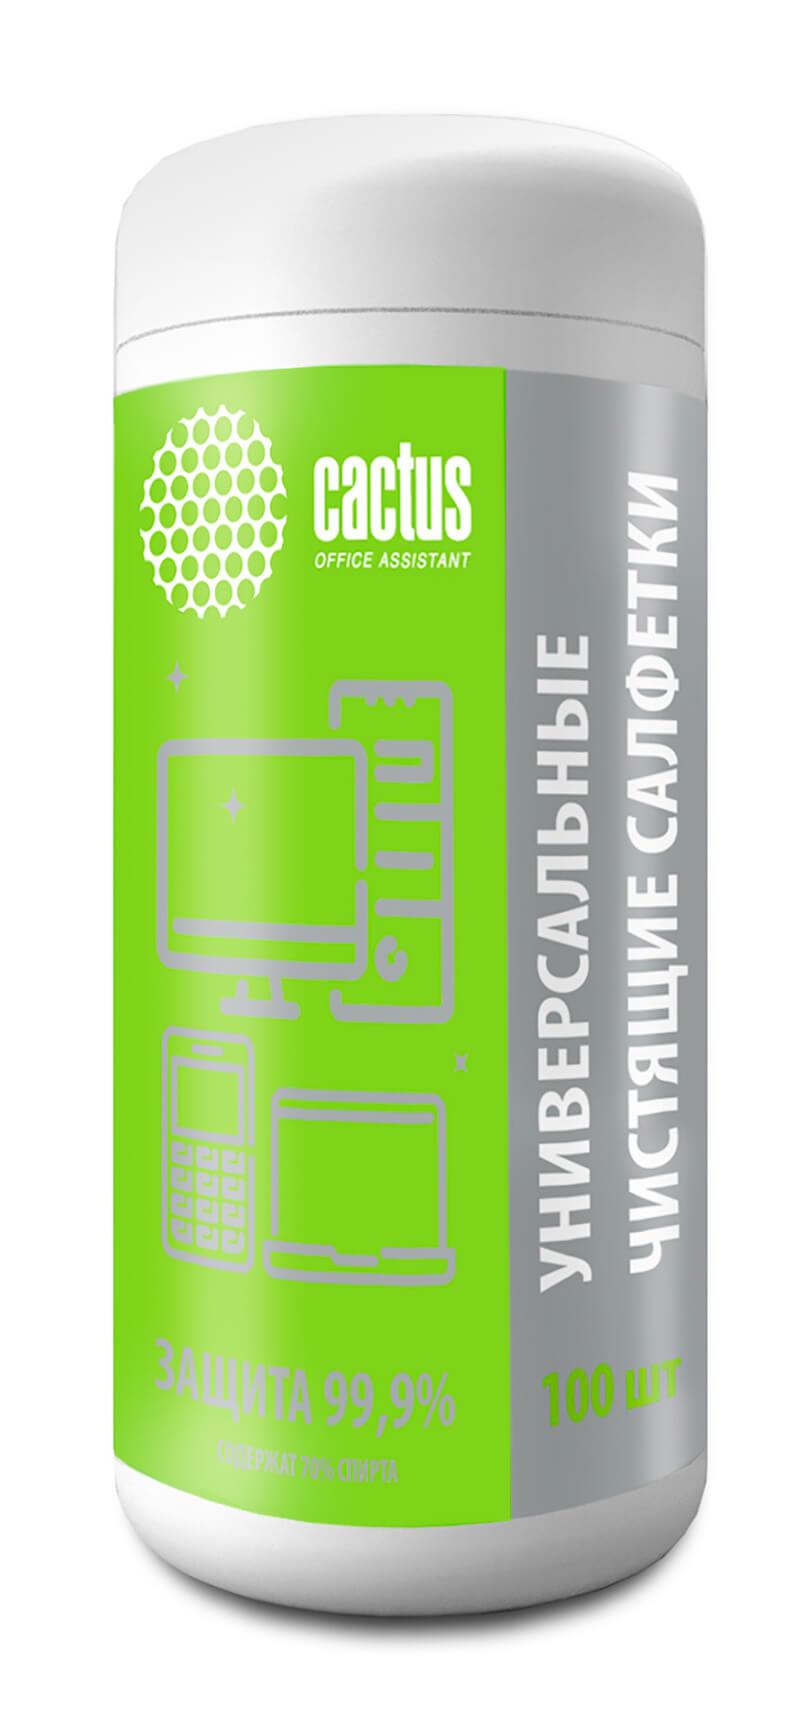 Cactus CS-ASC100 front